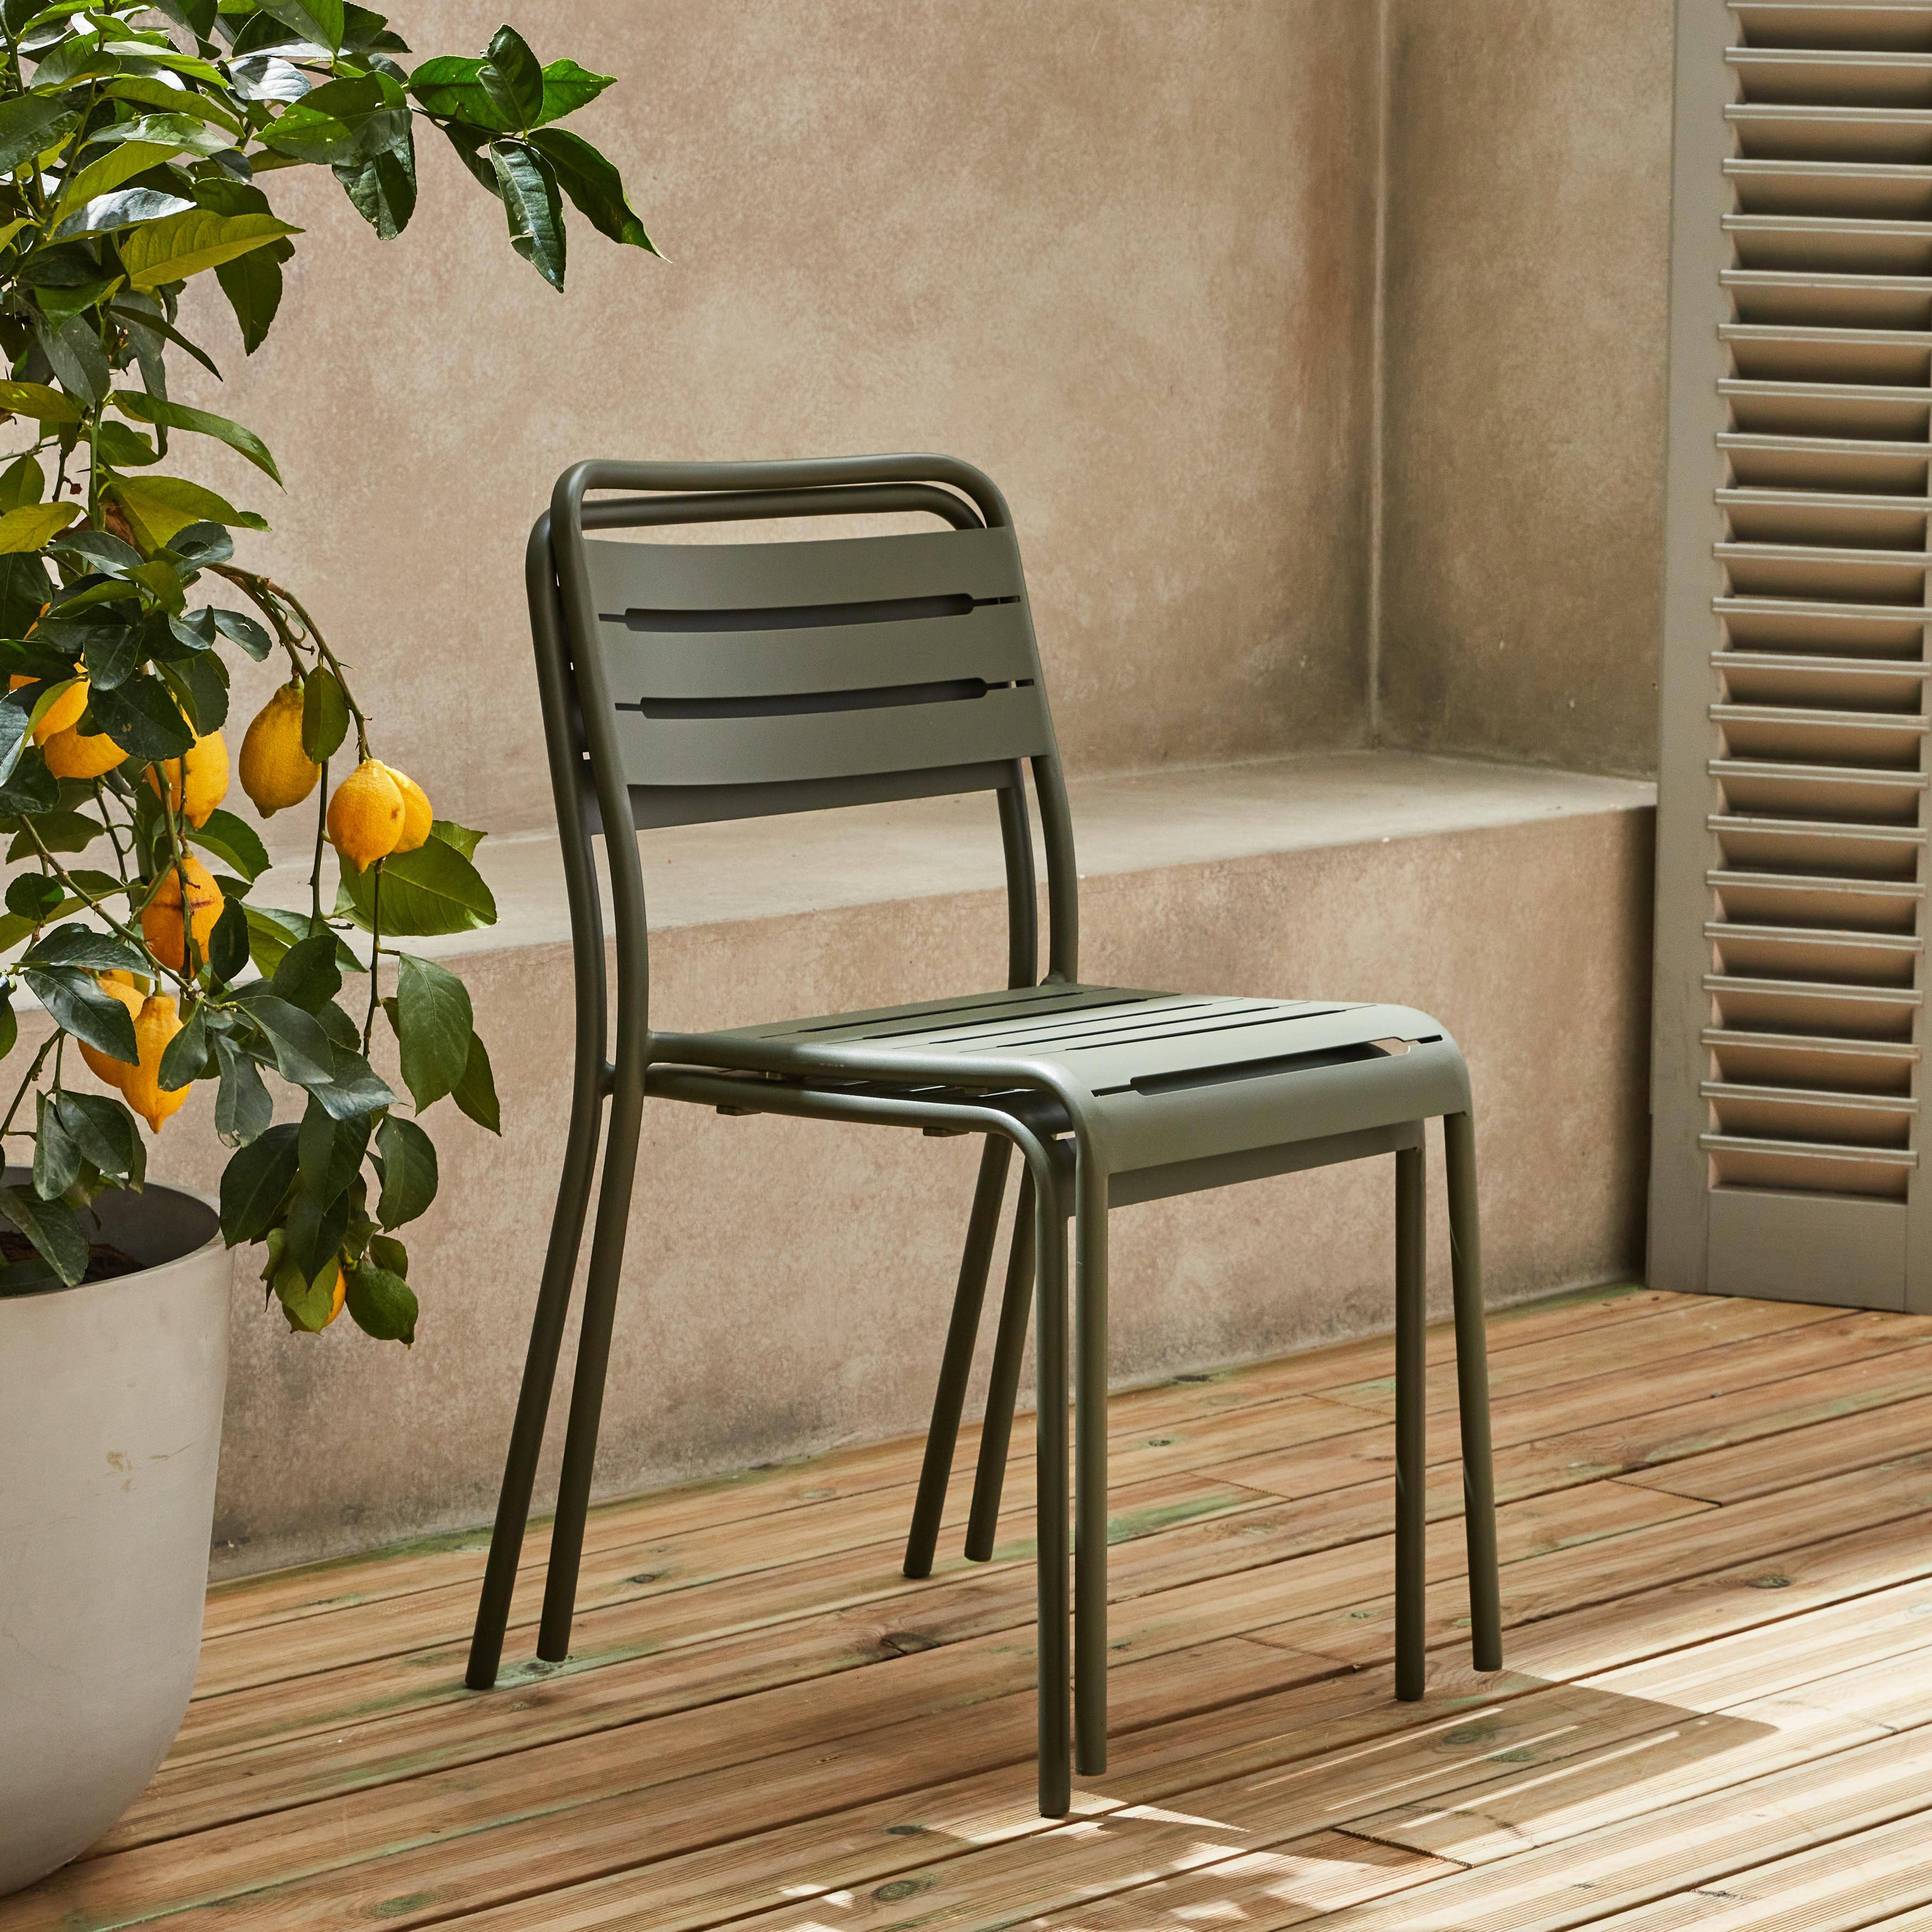 Amélia savane metalen tuintafel met 2 stoelen, latten en afgeronde hoeken, roestbestendige afwerking,sweeek,Photo3